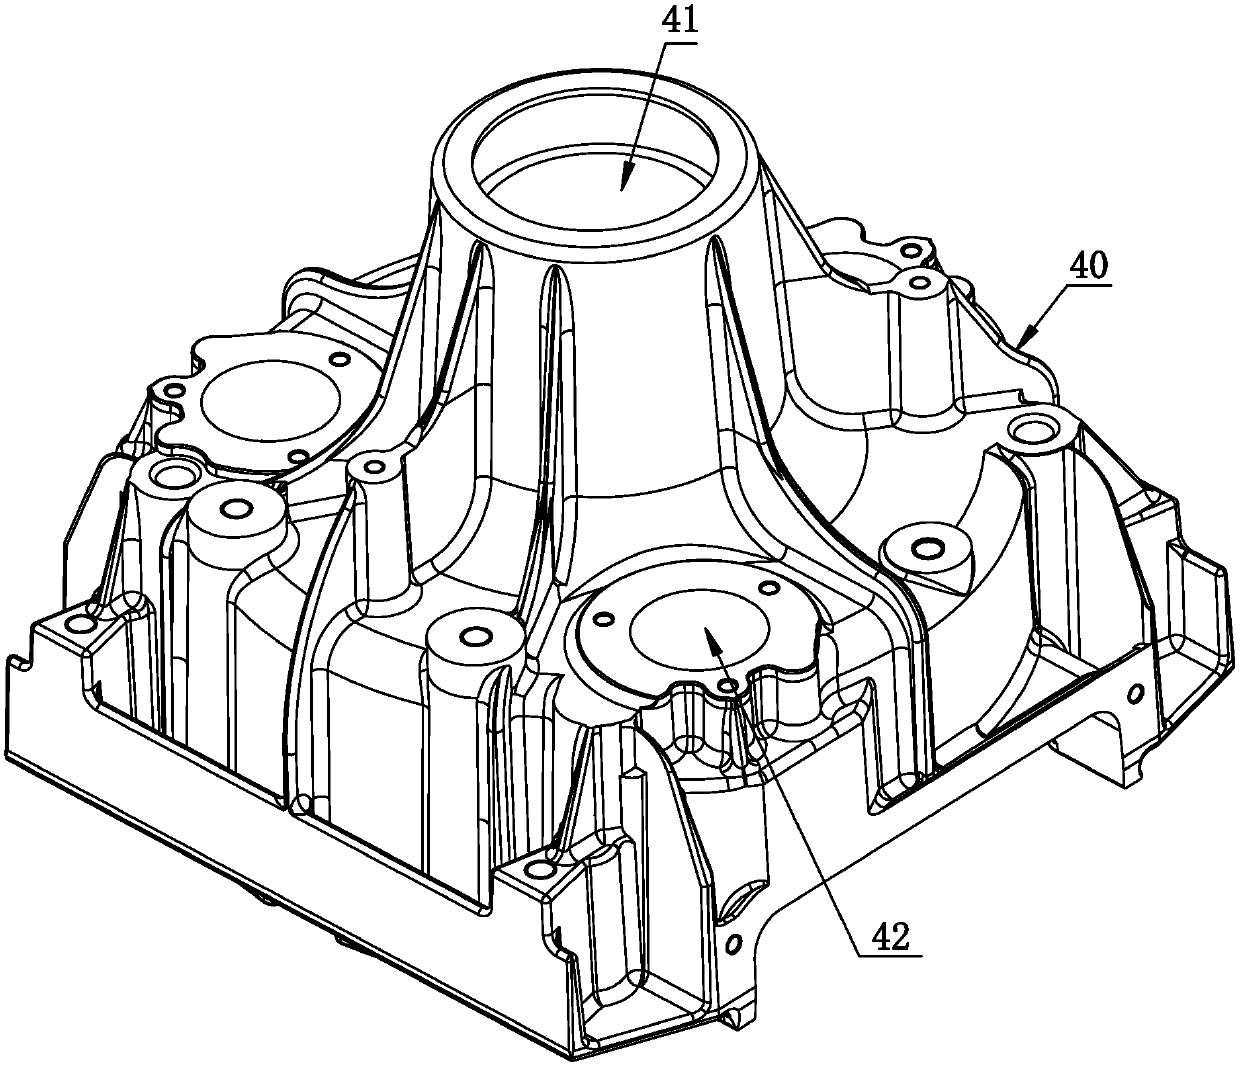 A scroll air compressor